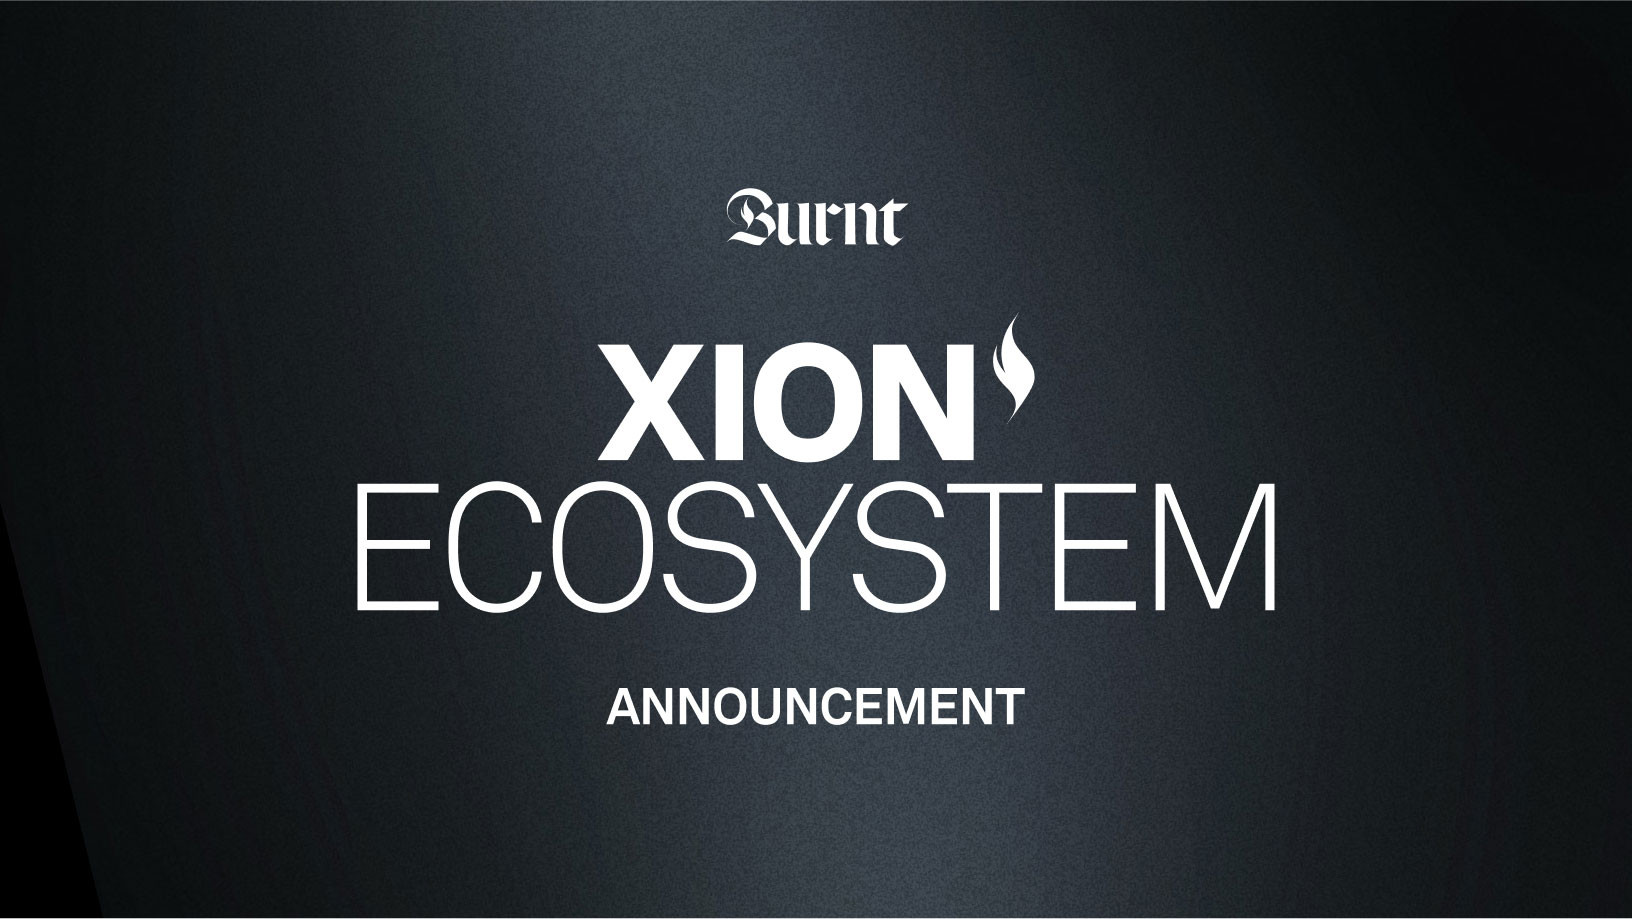 Xion Ecosystem.